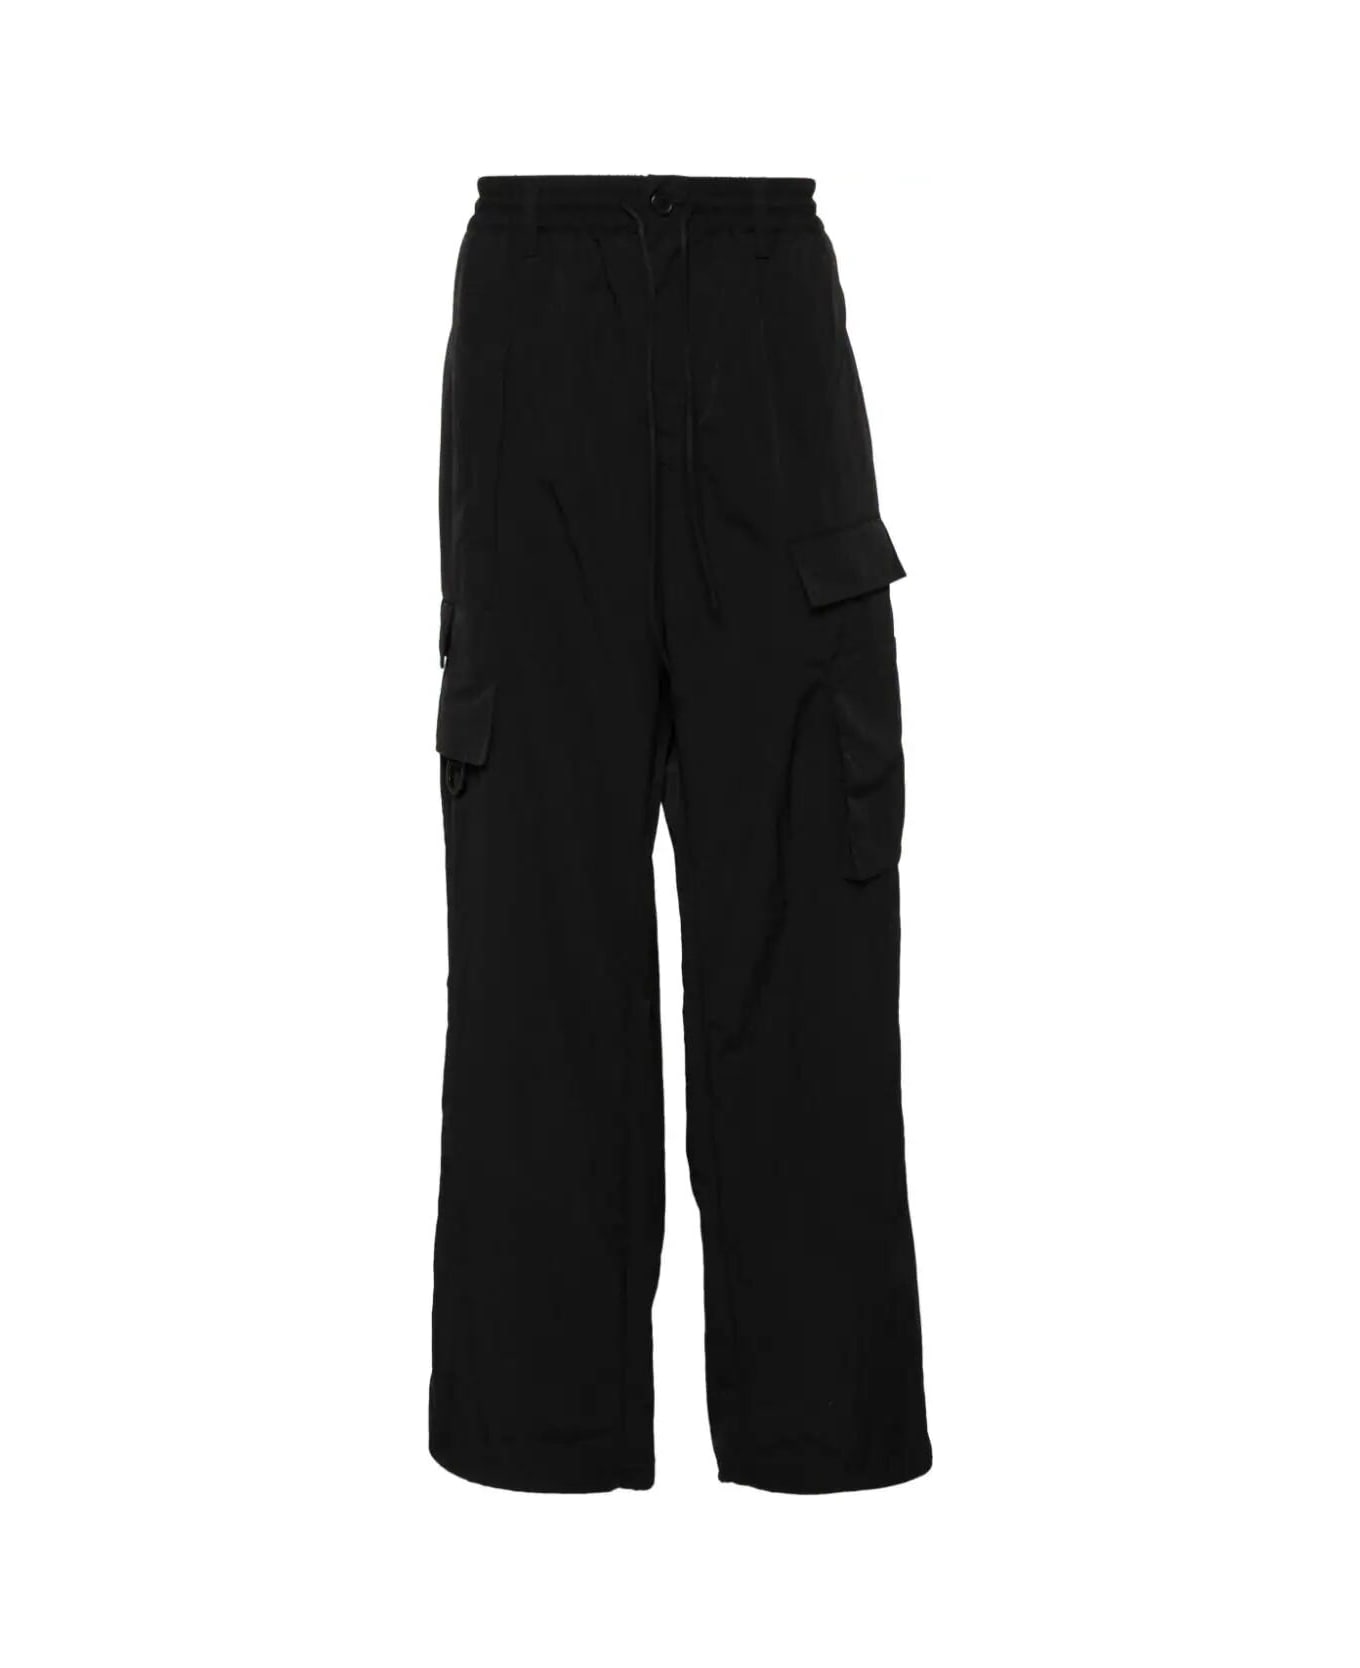 Y-3 Nylon Pants - Black